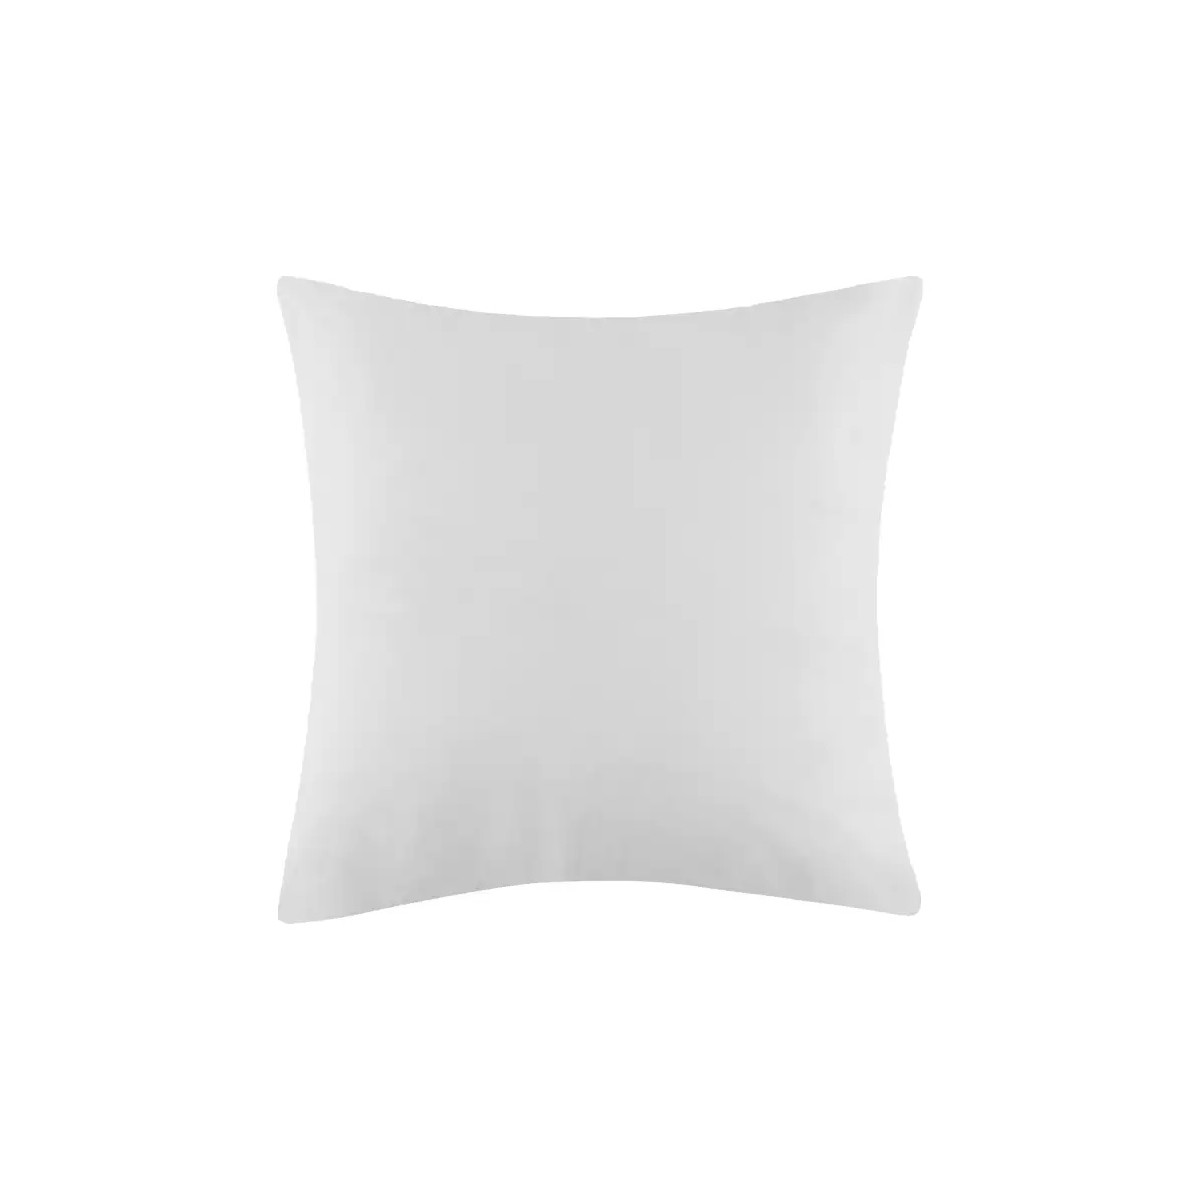 Inner cushion 50 x 50 cm